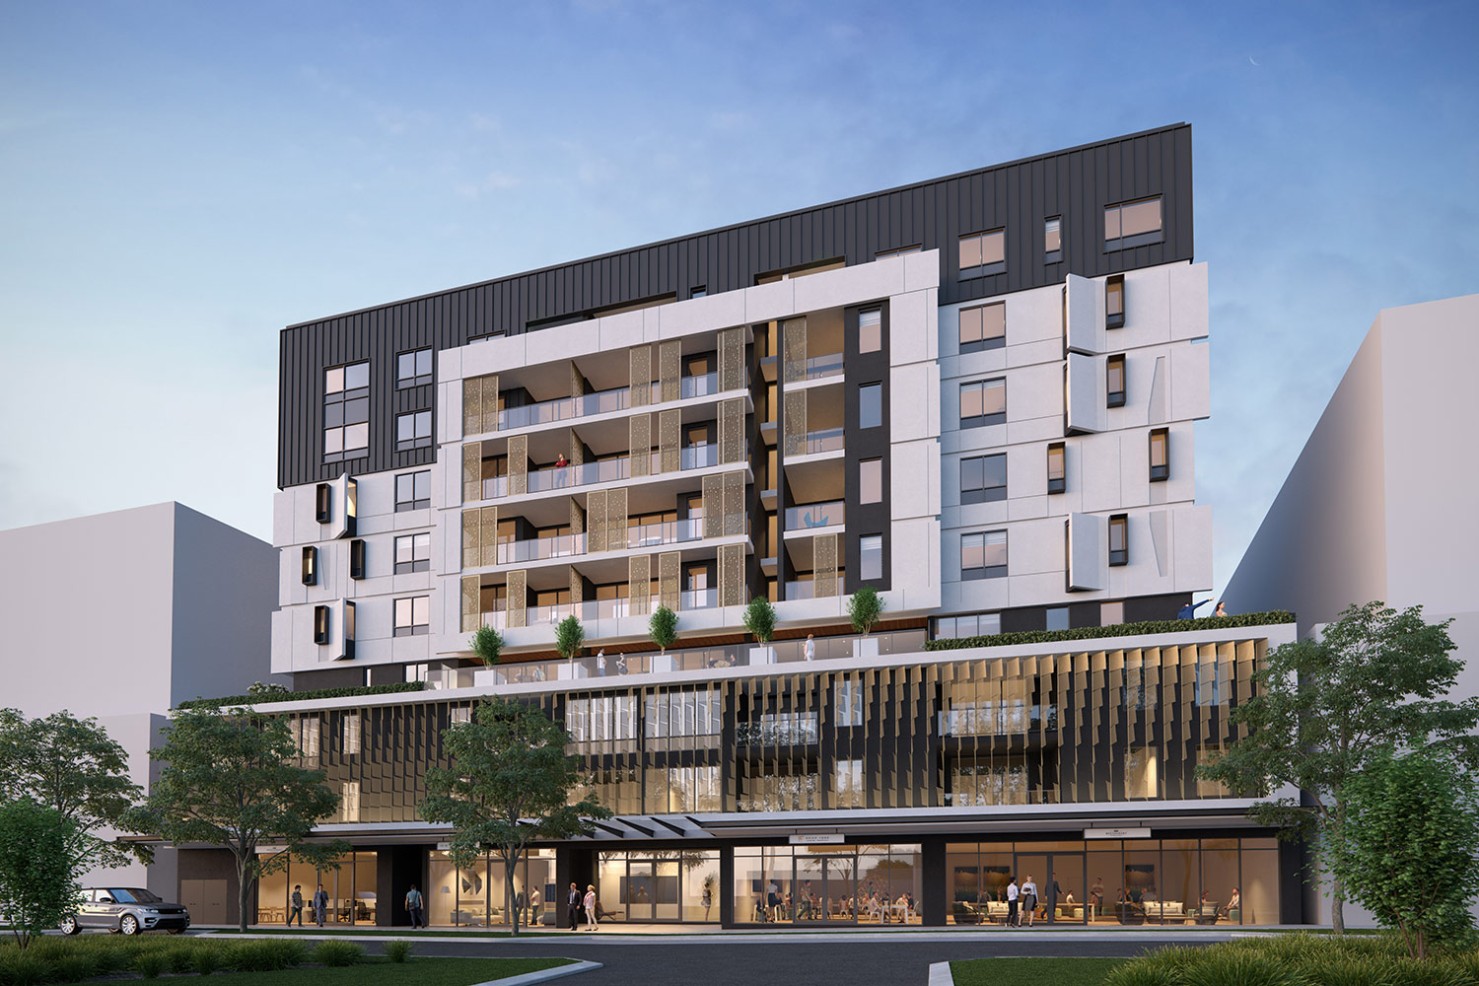 Leila Street Apartments, DesignInc, Perth, Perth Architect, Nic MacCormac